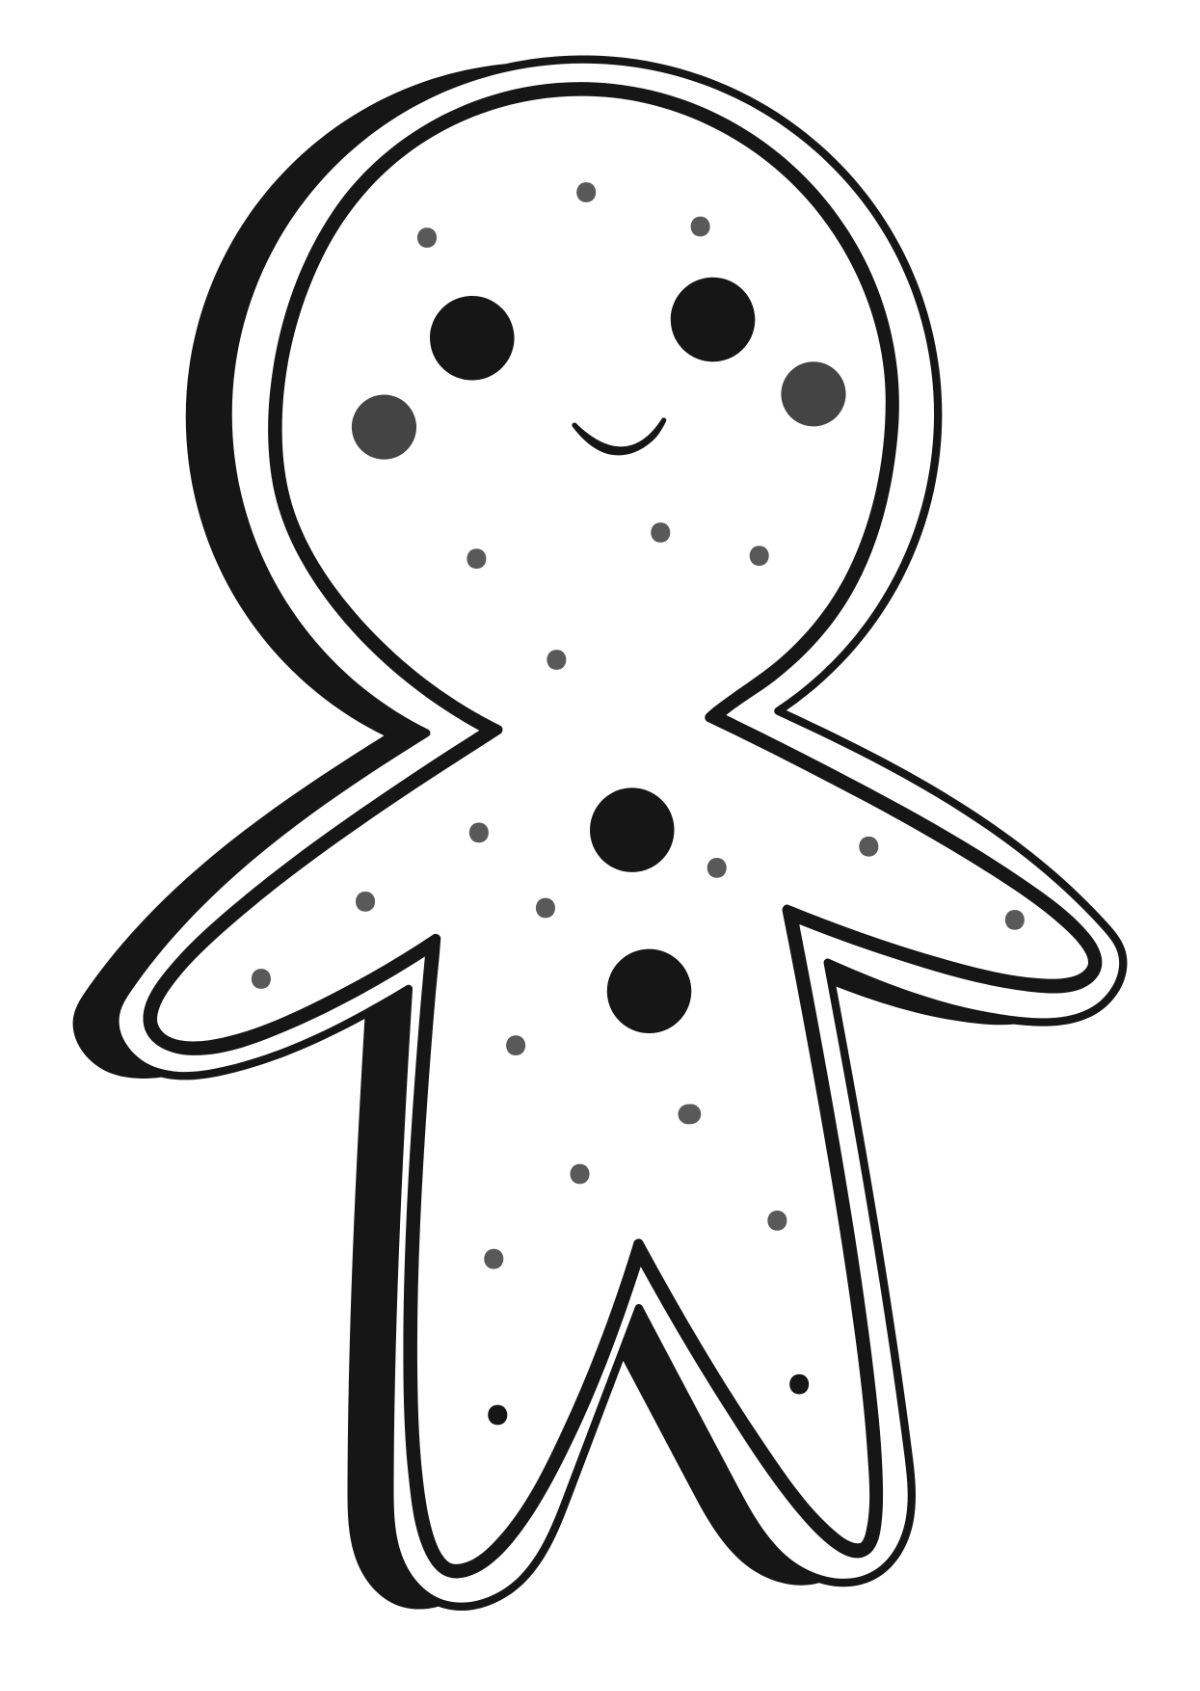 Gingerbread Man Drawing Template